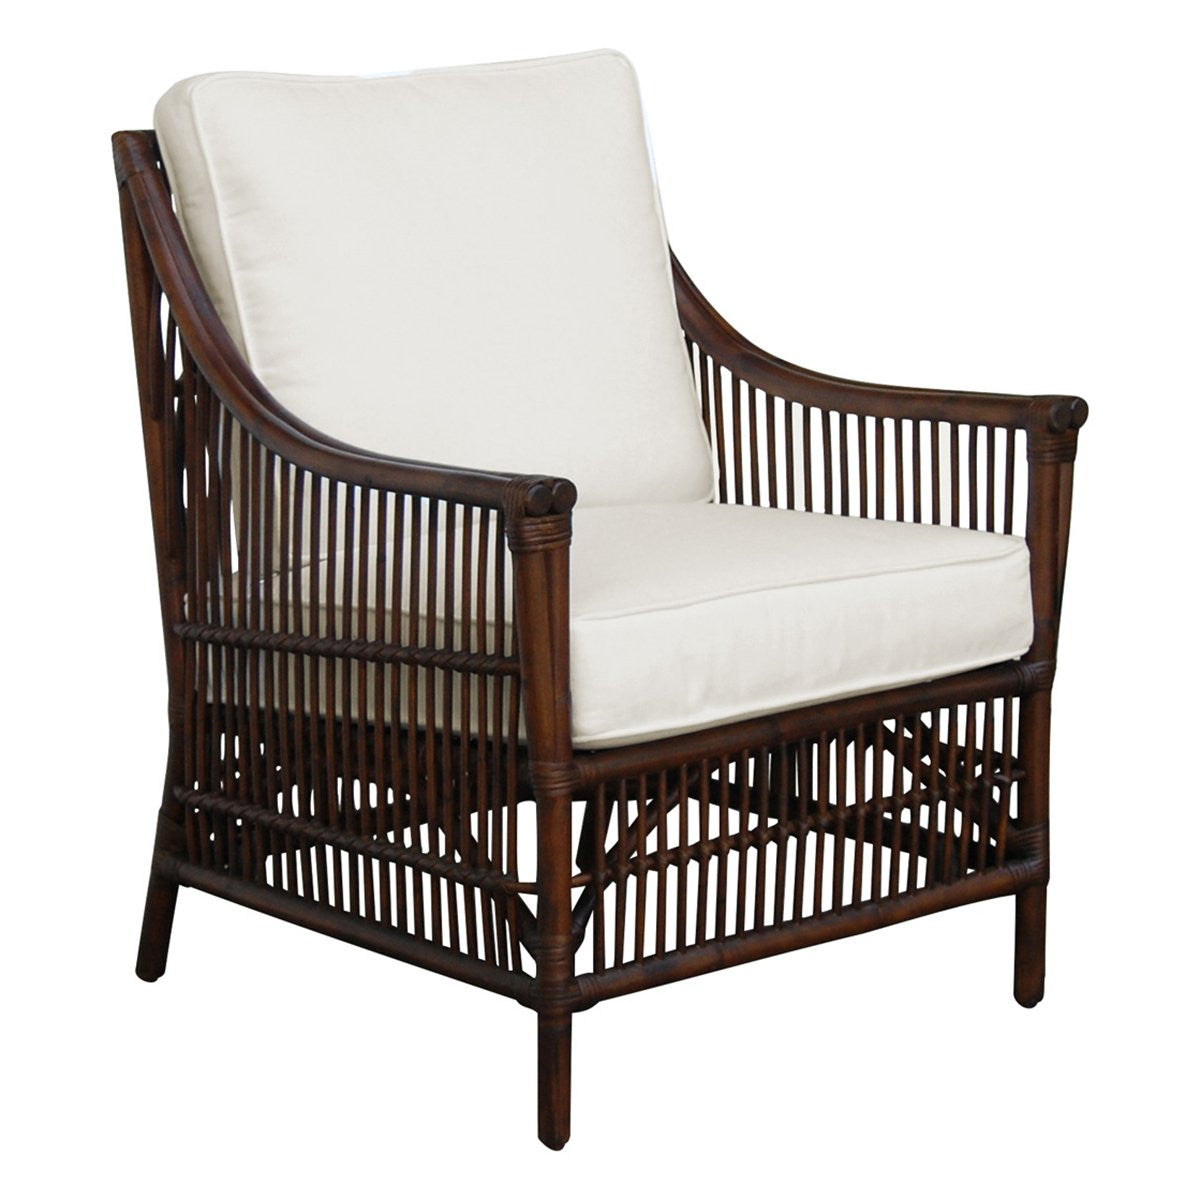 Panama Jack Bora Bora Lounge Chair with Cushions